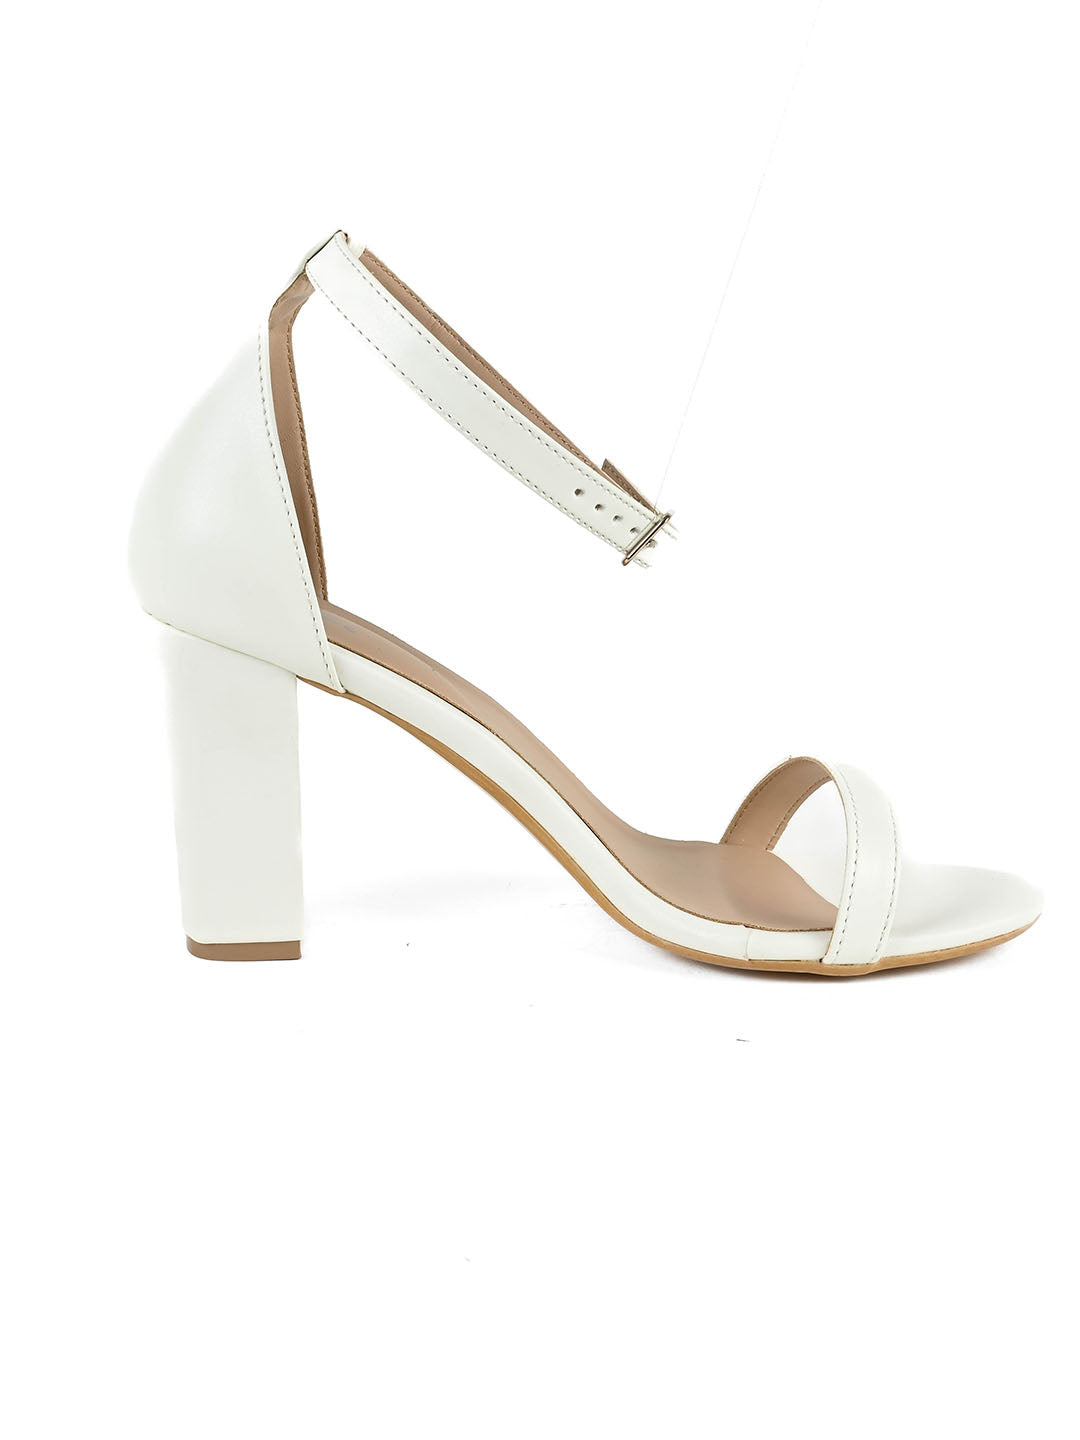 Size 8 Lulus Off White Ankle Strap Heels | eBay